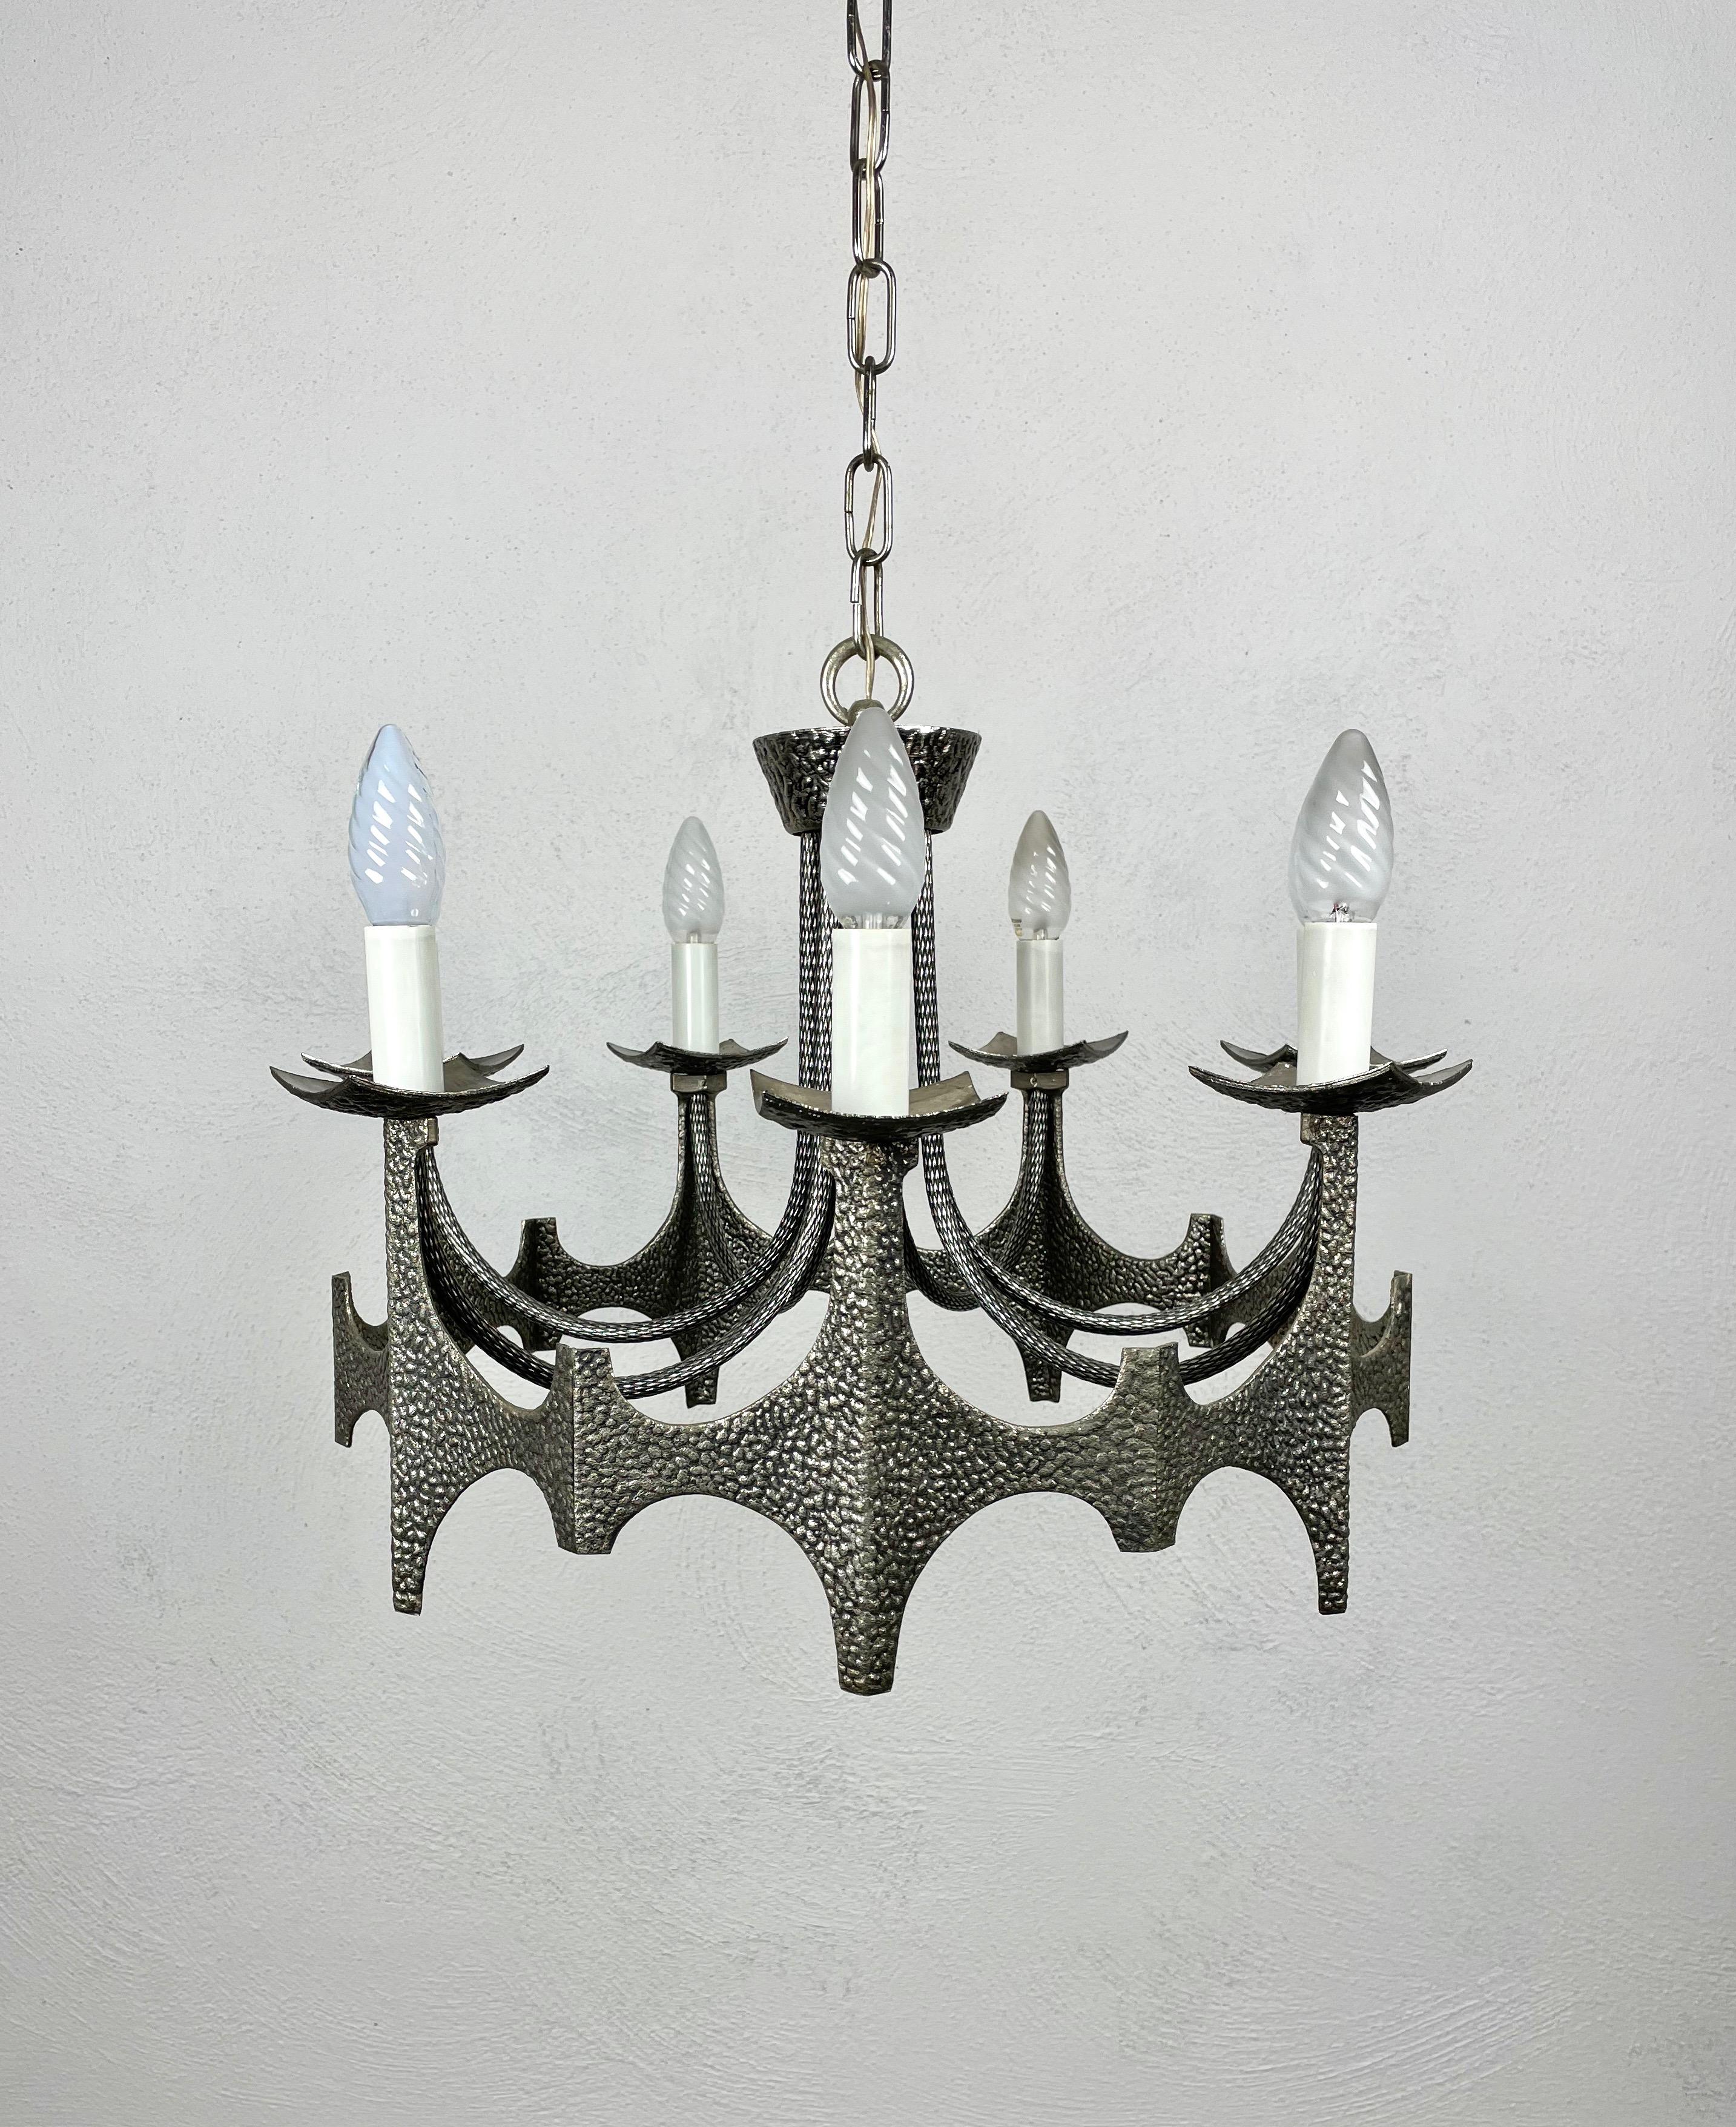 Mid-Century Modern pendant chandelier in iron, Brutalist style, seven lights.